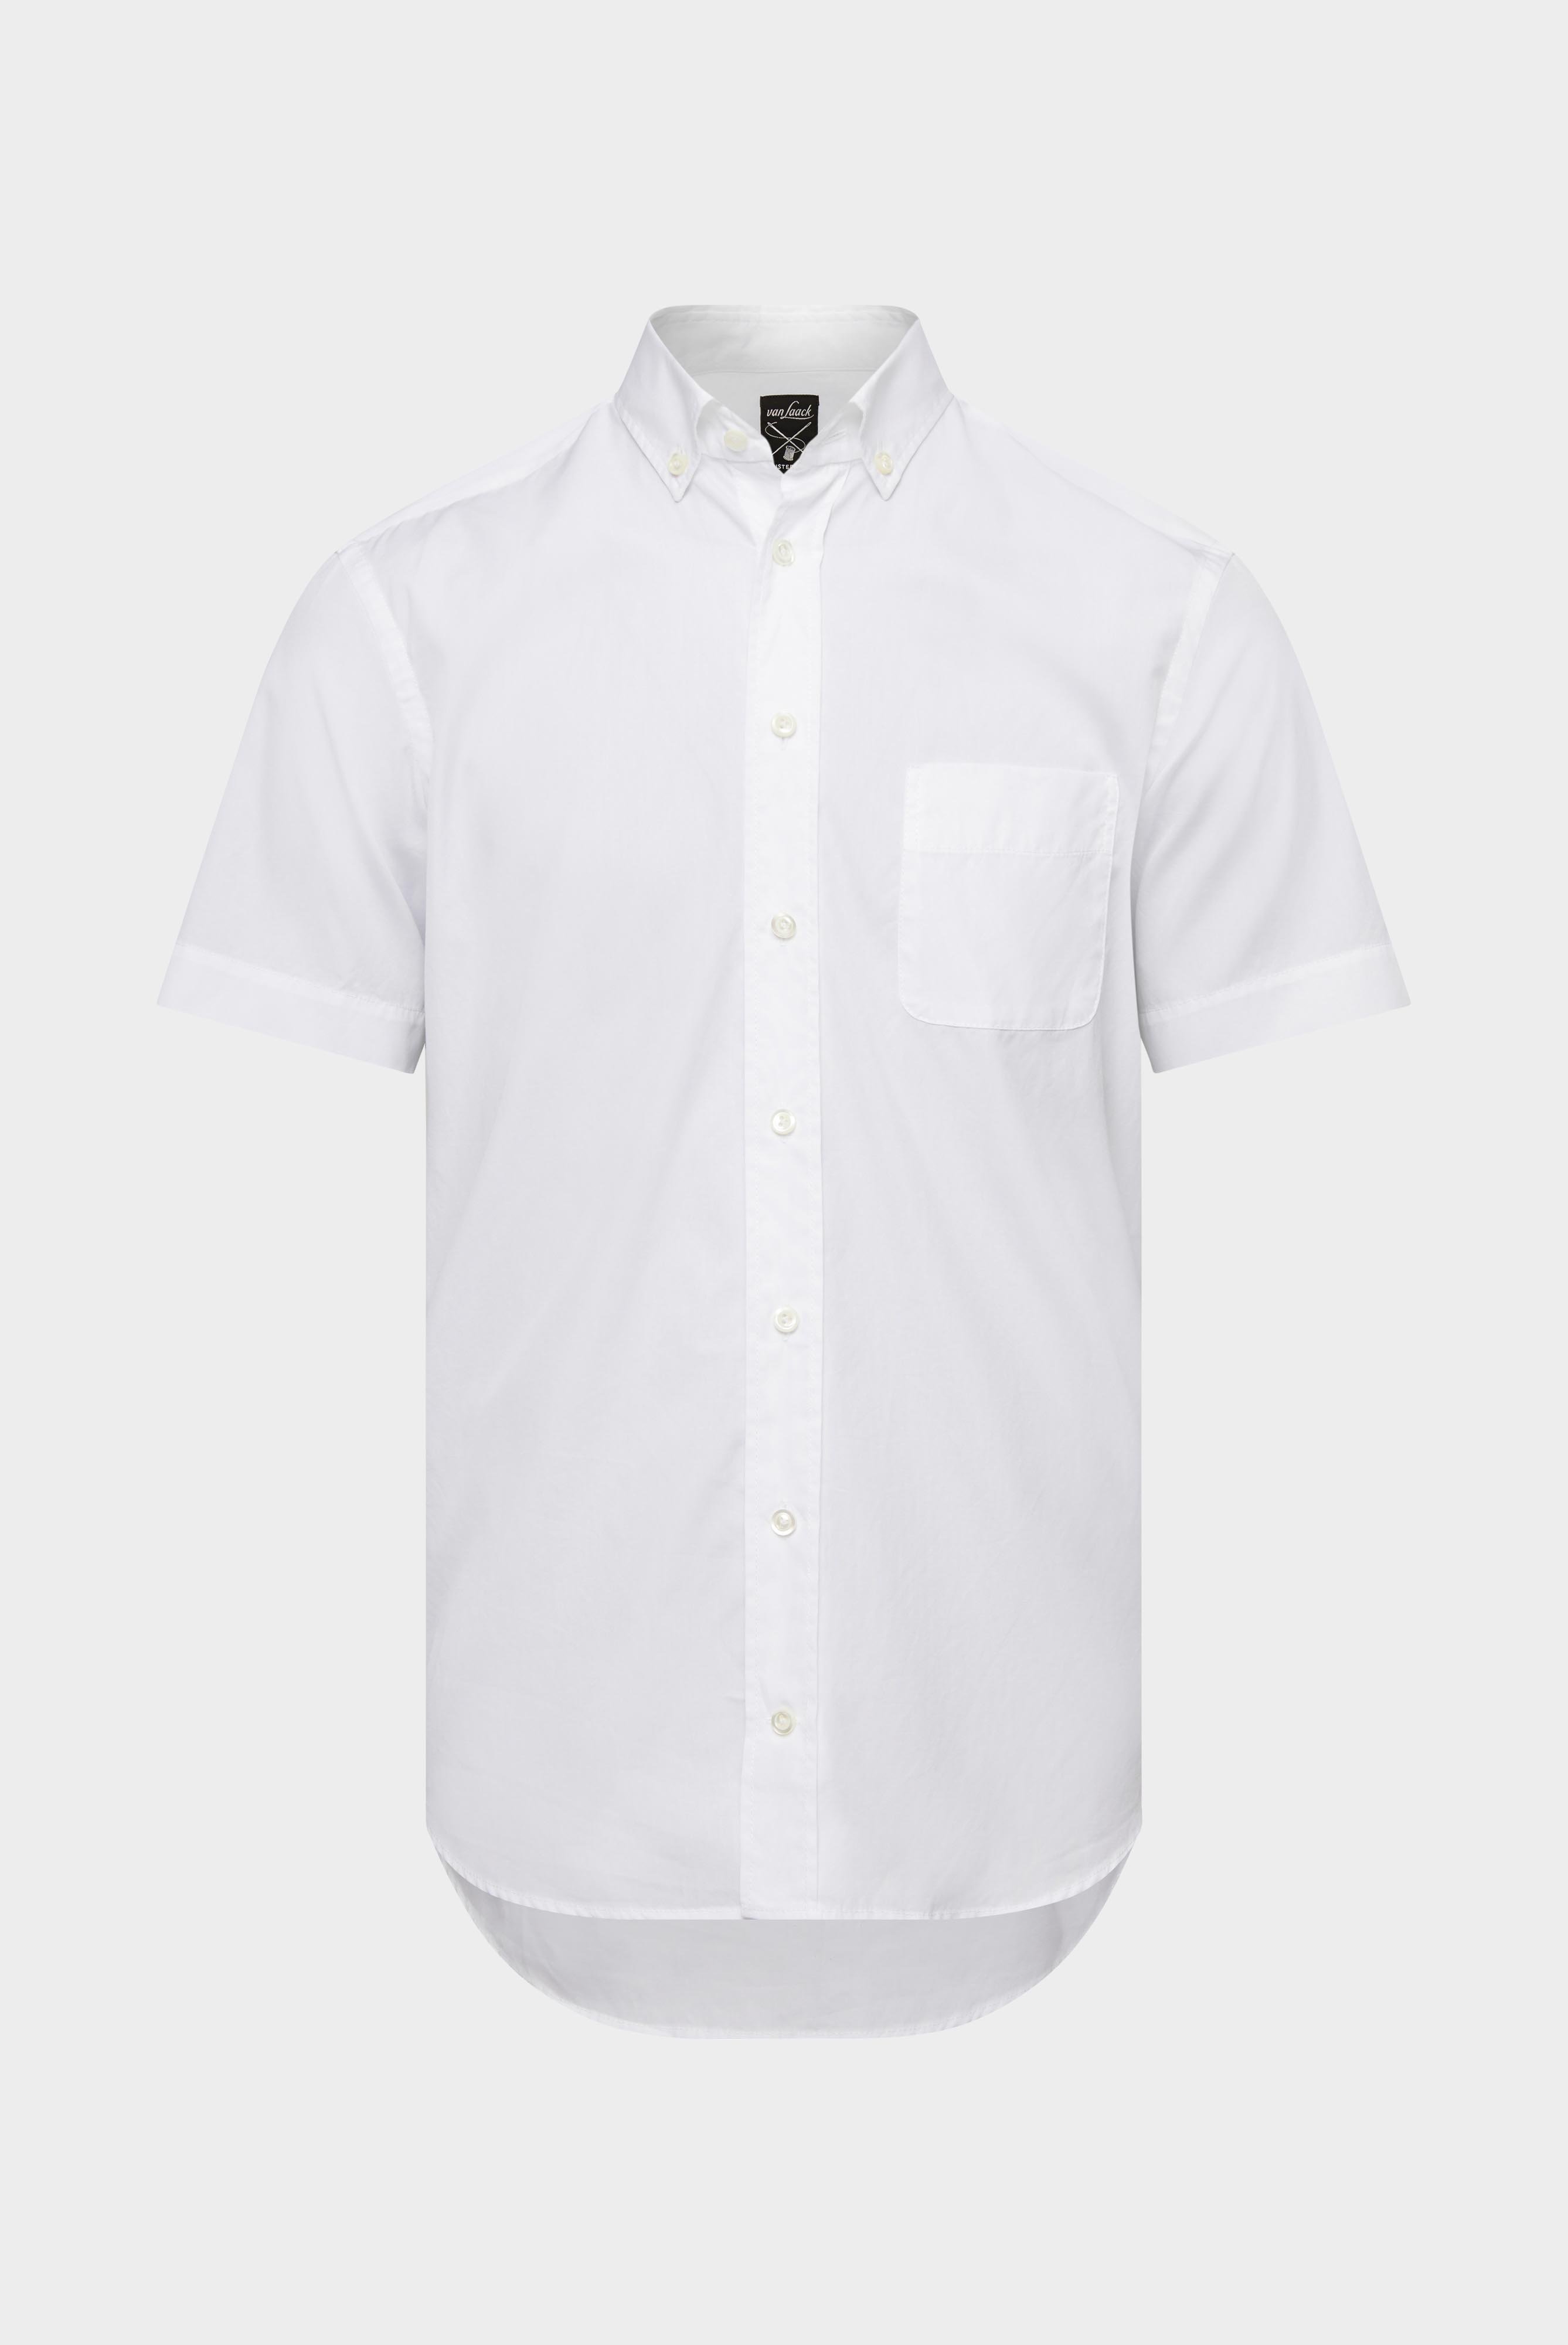 Kurzarm Hemden+Kurzärmliges Hemd aus Baumwollpopeline+20.2053.Q2.130648.000.39